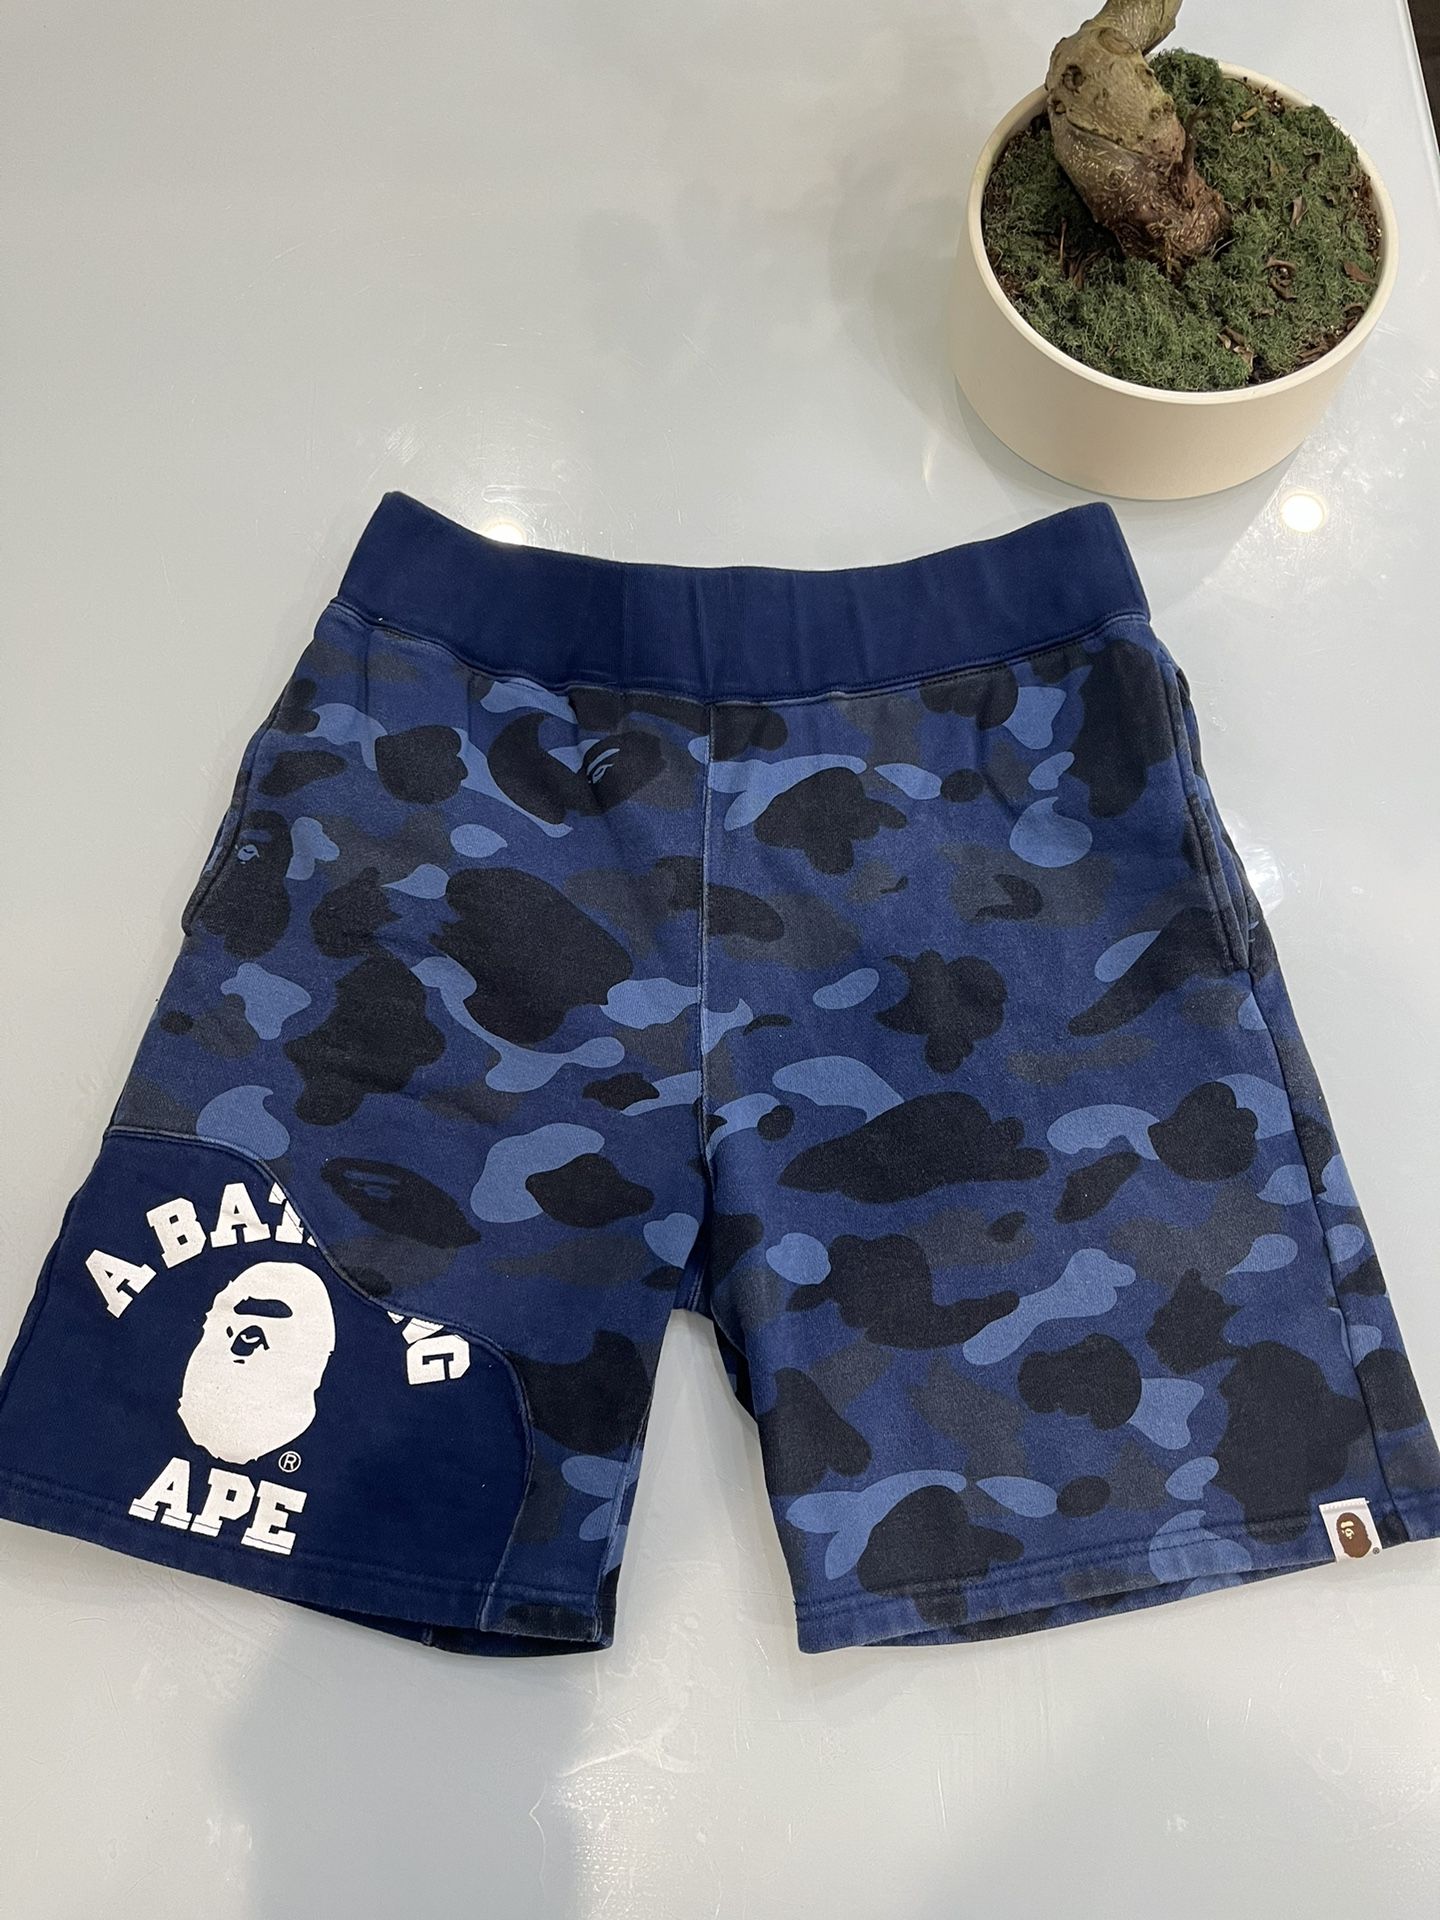 Blue bape shorts size medium